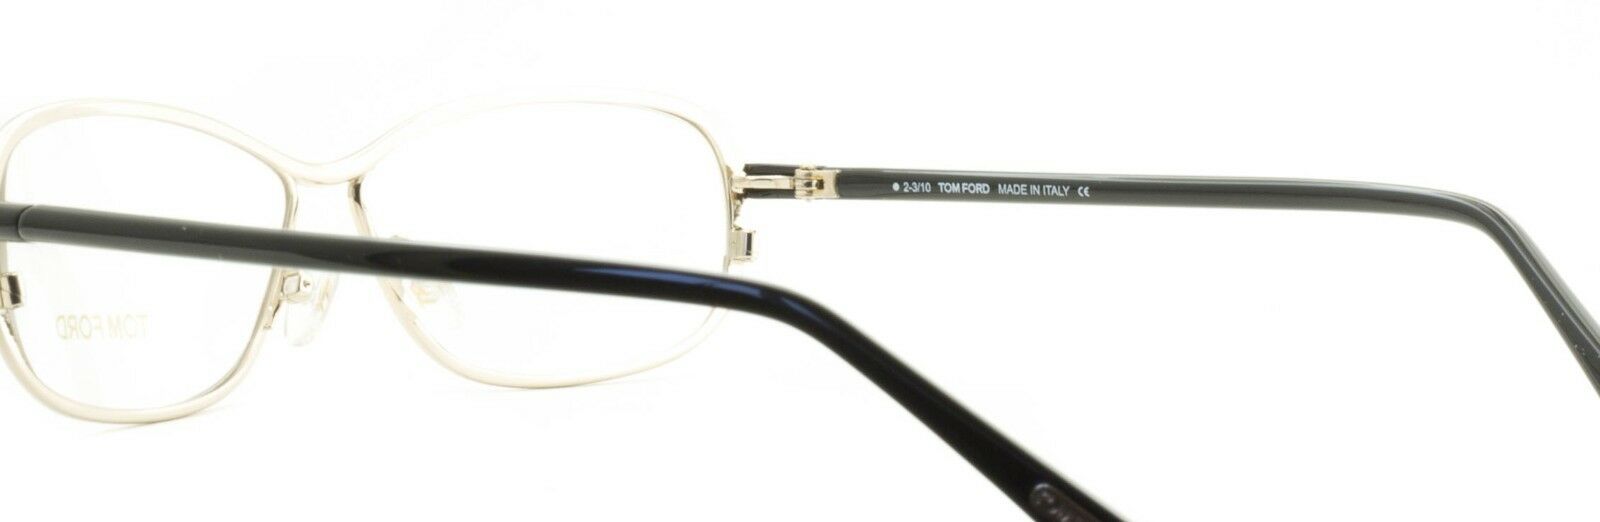 TOM FORD TF 5161 028 56mm Eyewear FRAMES RX Optical Eyeglasses Glasses New Italy